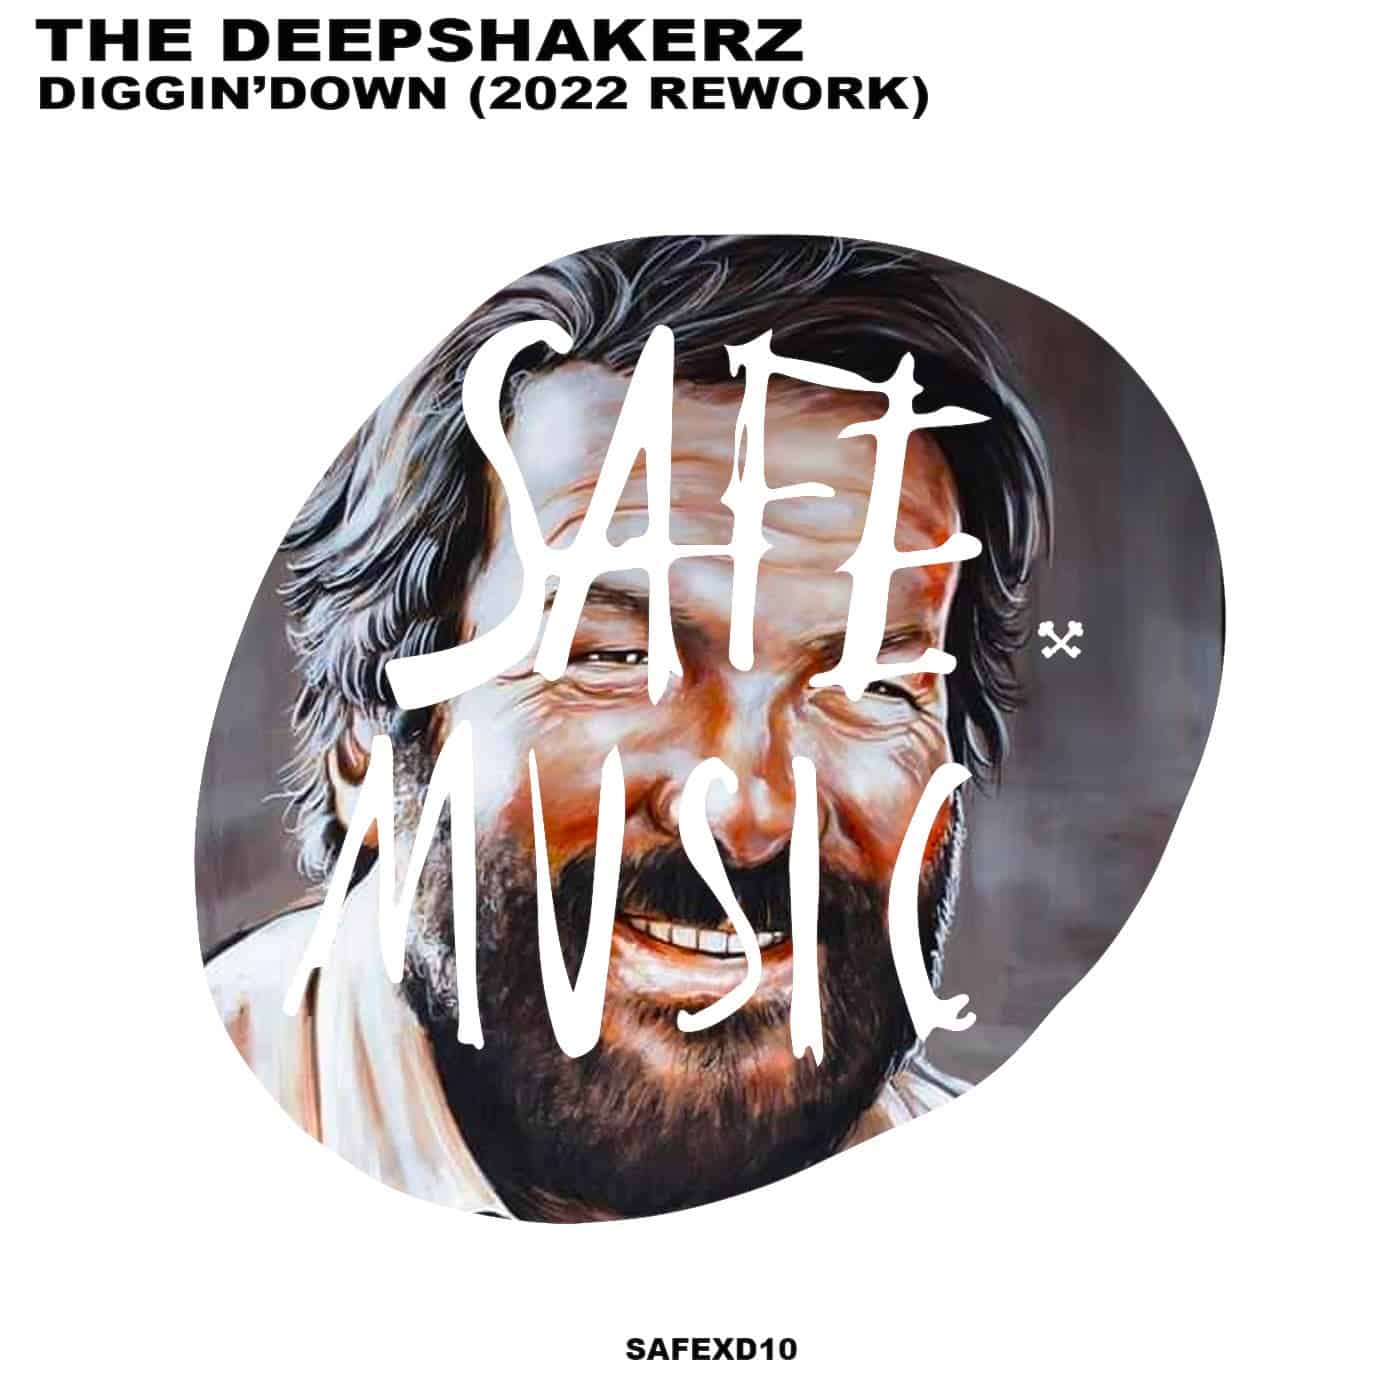 image cover: The Deepshakerz - Diggin'Down (2022 Rework) / SAFEXD10B